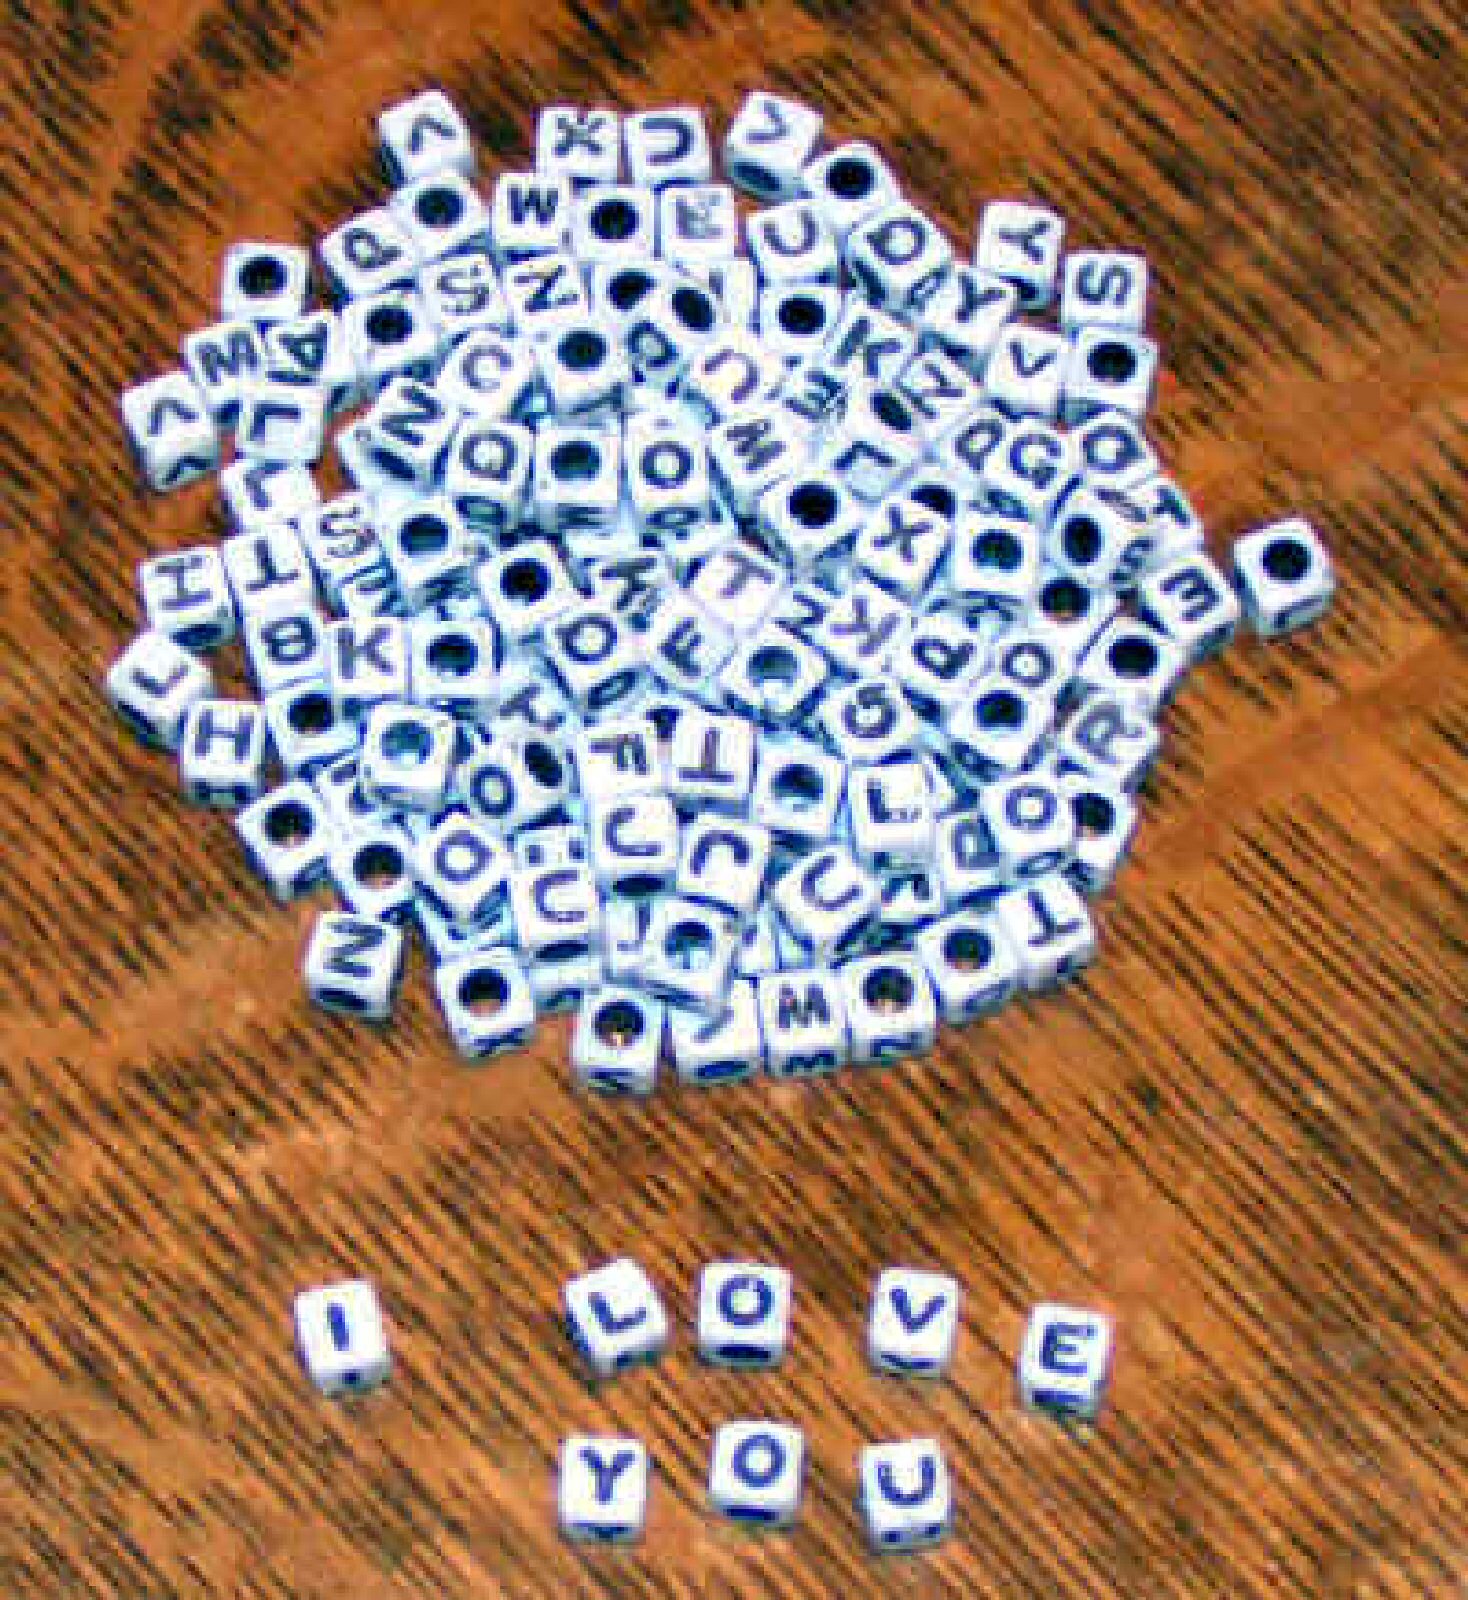 160 BW Alphabet Beads for Crafts